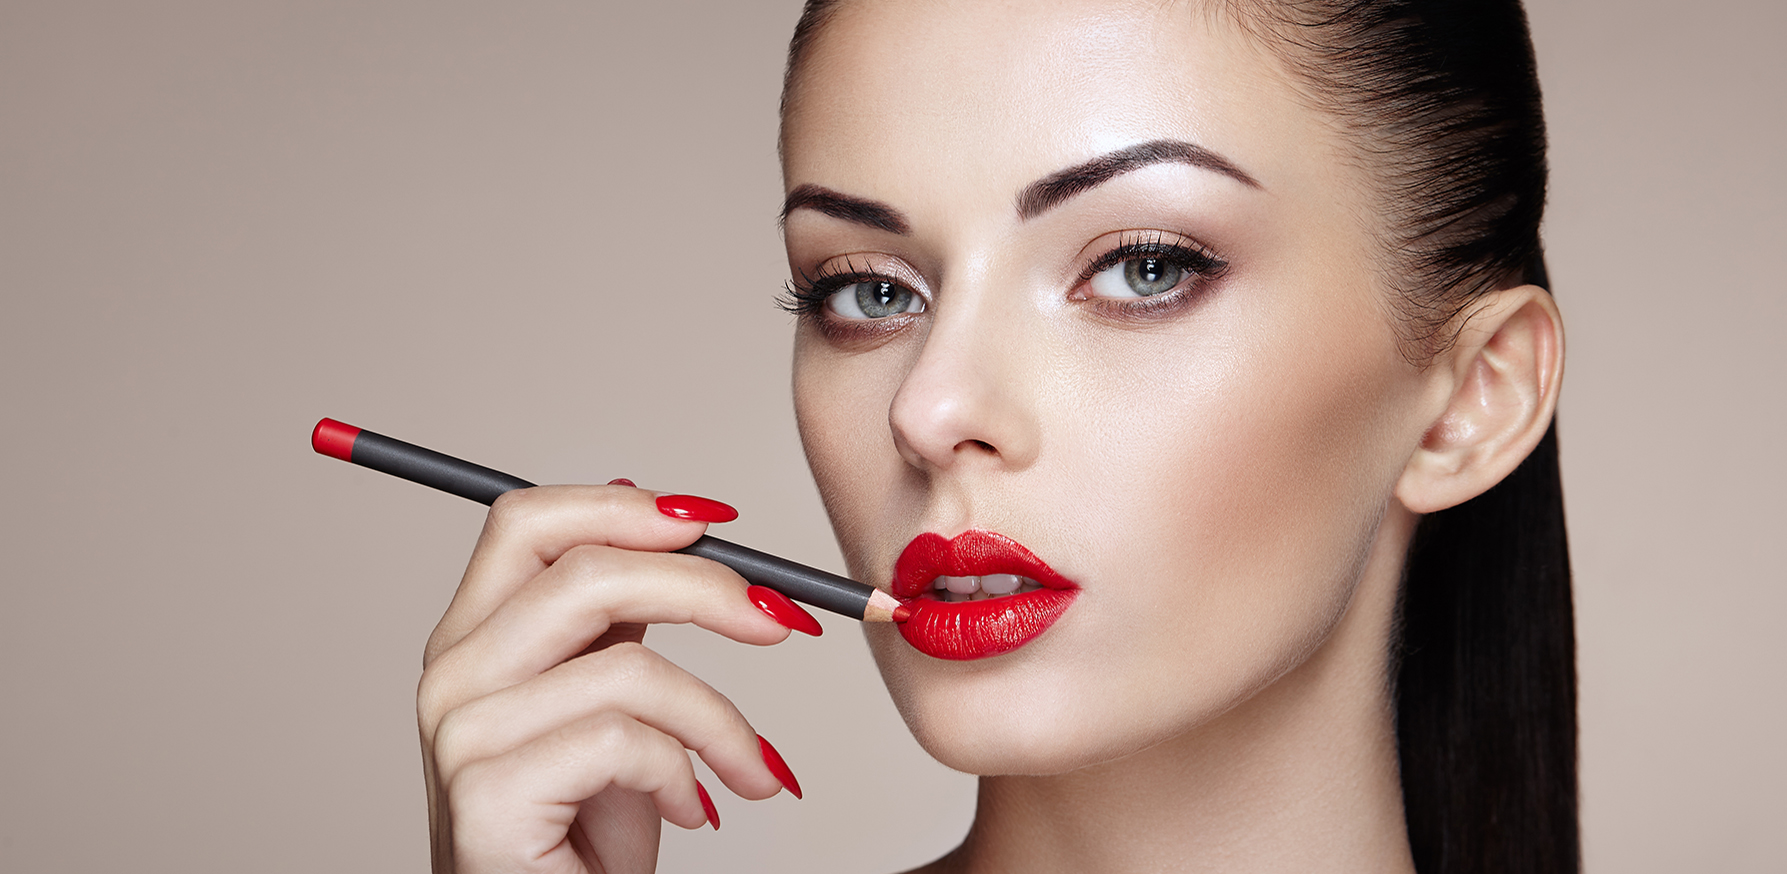 drugstore-makeup-brands-on-par-with-high-end-brands-woman-applying-makeup